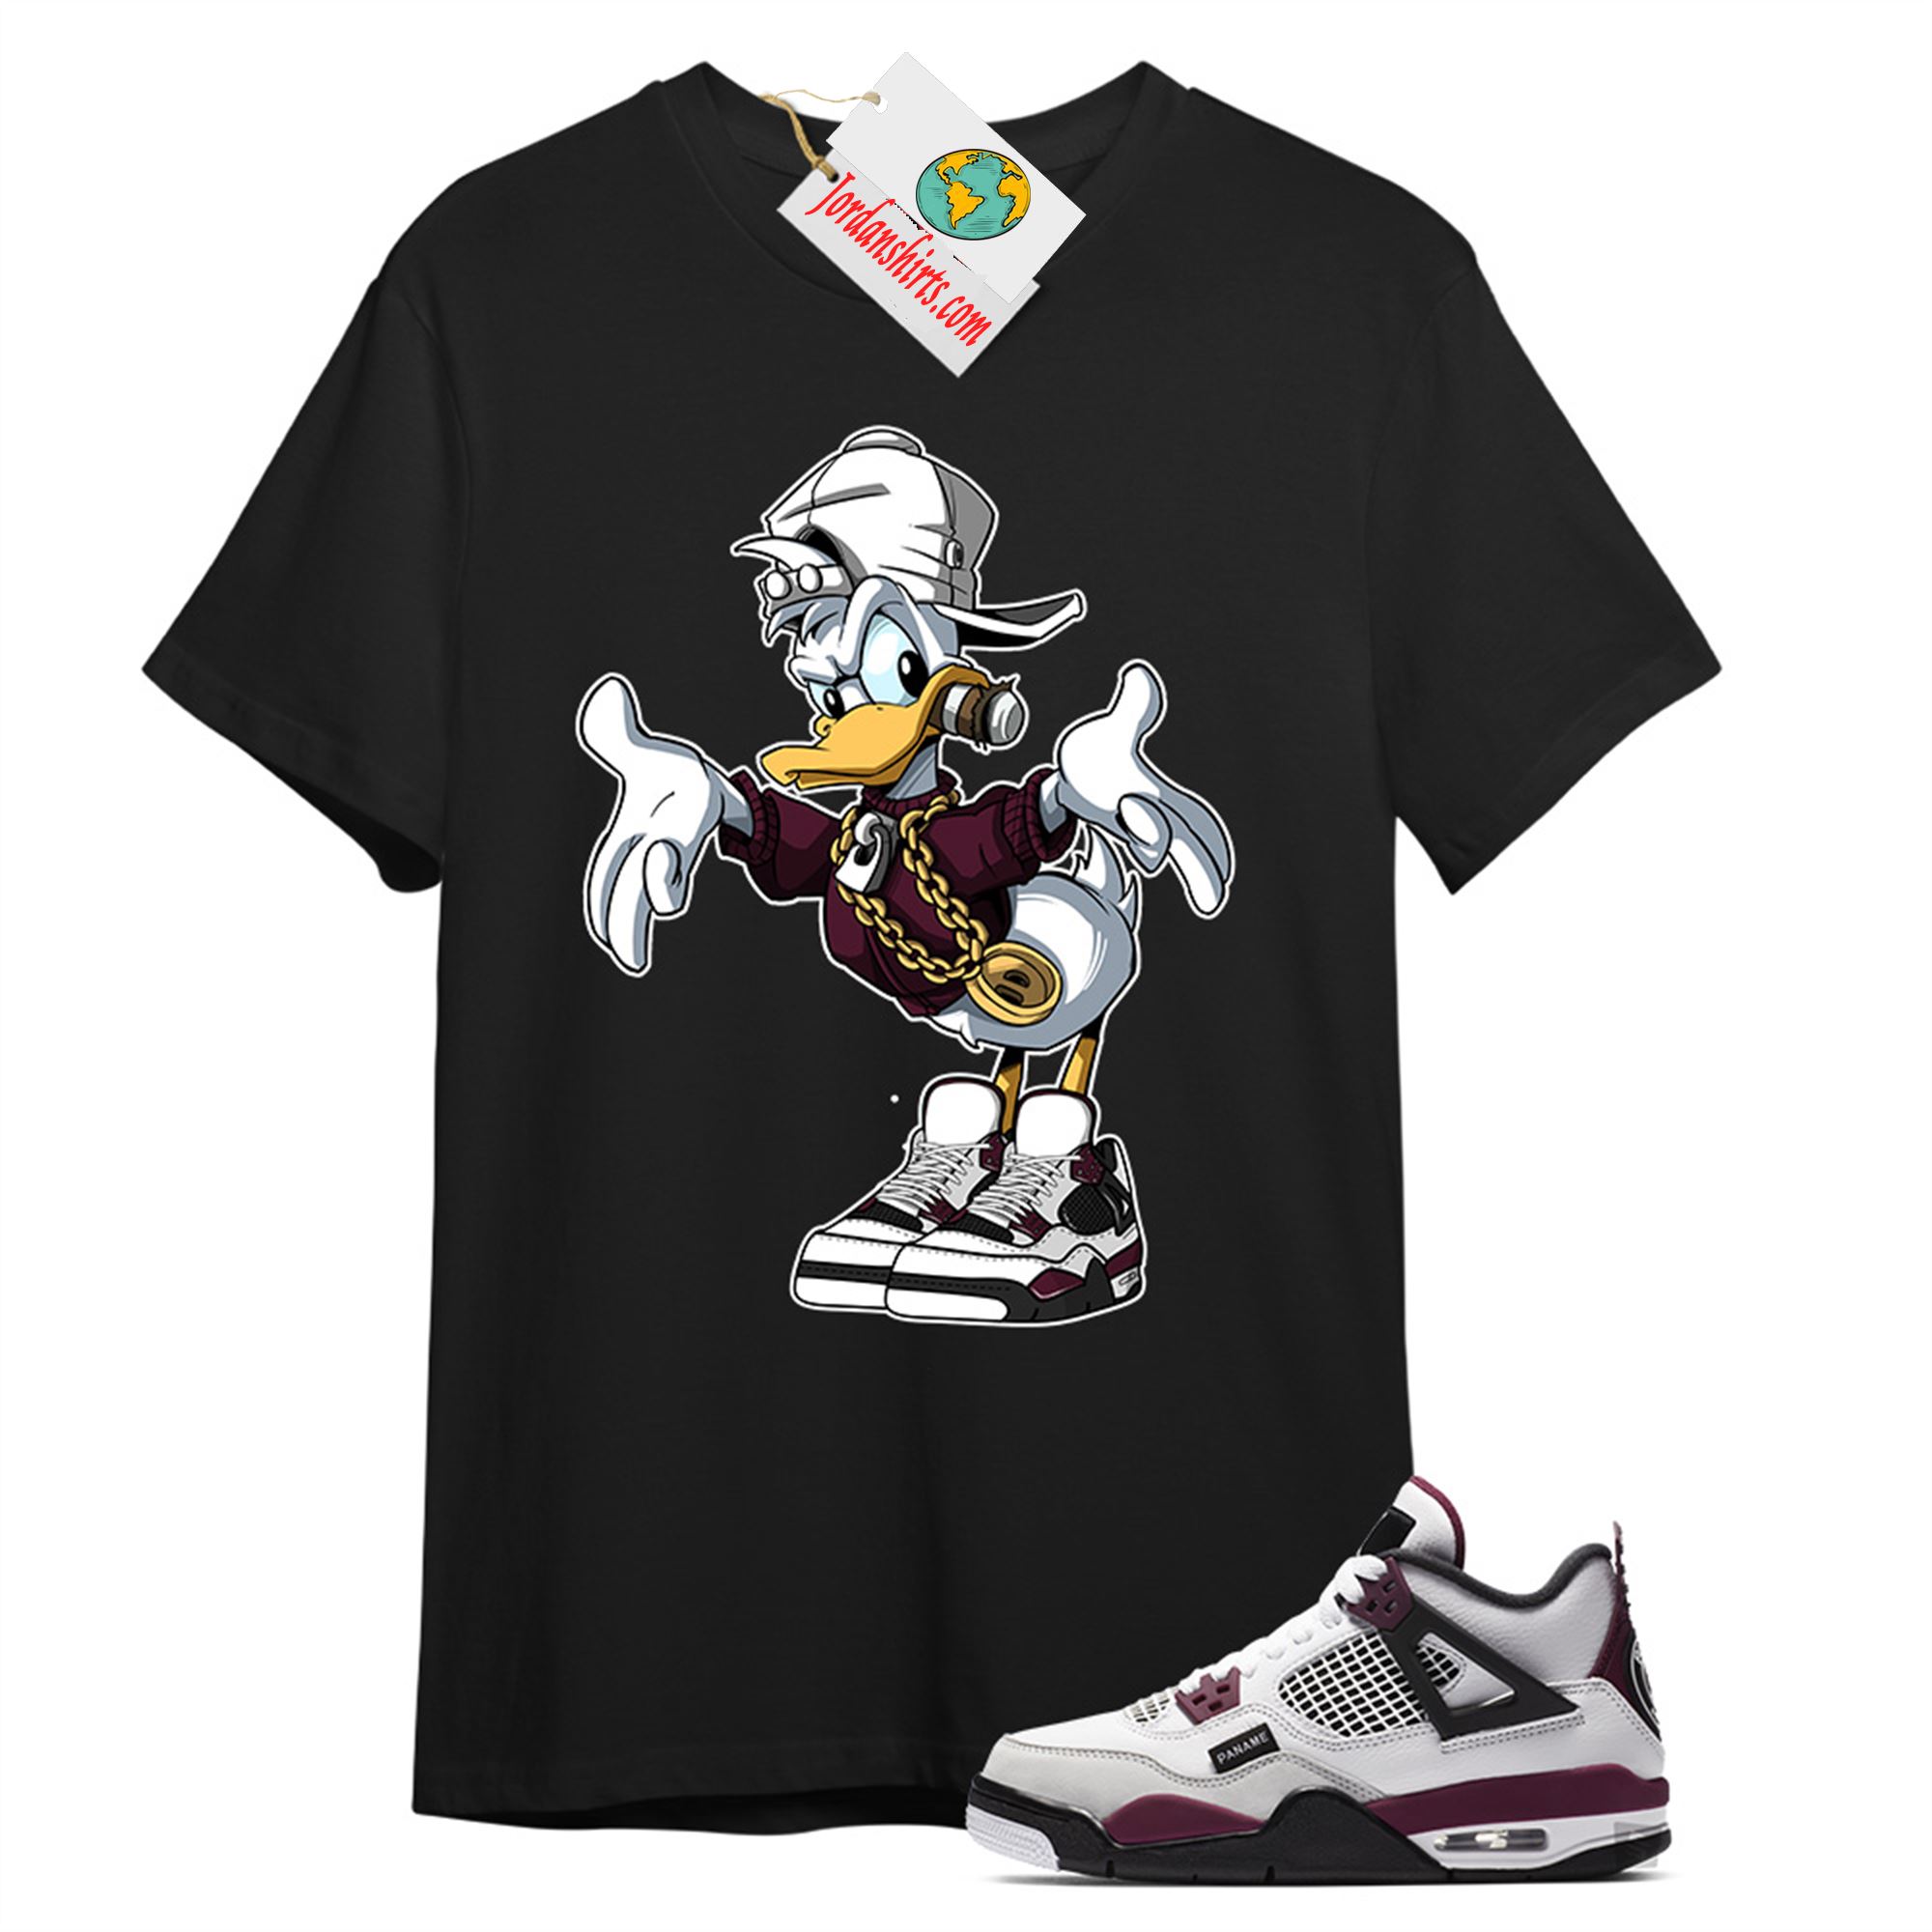 Jordan 4 Shirt, Donald Duck Black T-shirt Air Jordan 4 Psg 4s Plus Size Up To 5xl